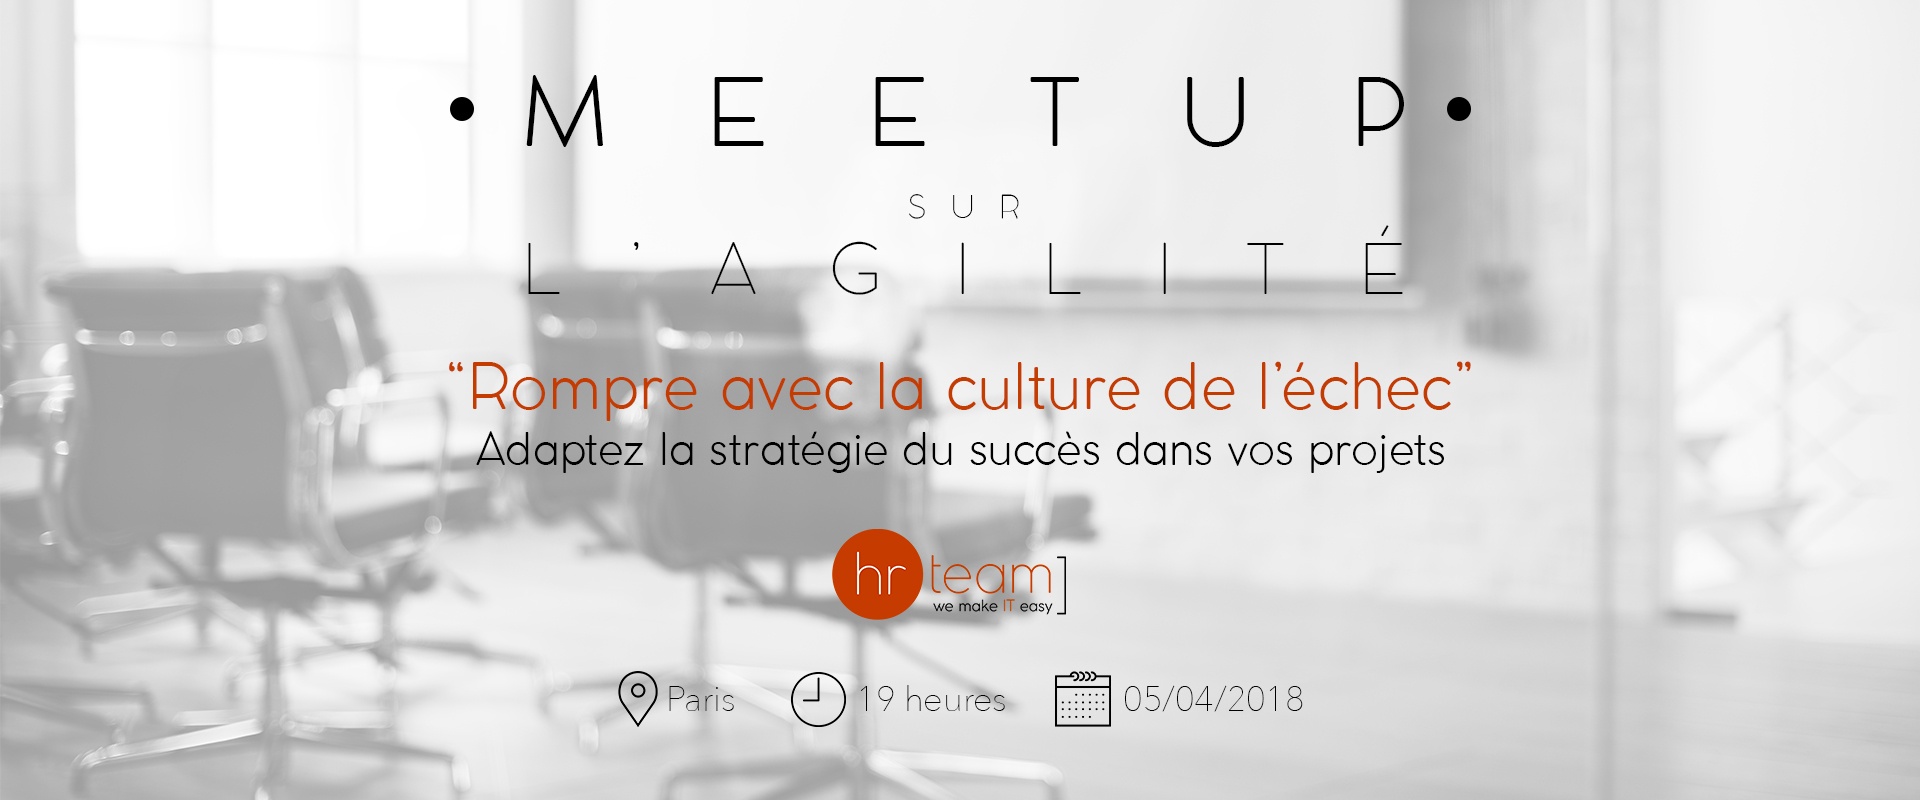 Participate in the next HR Team Paris MeetUp !